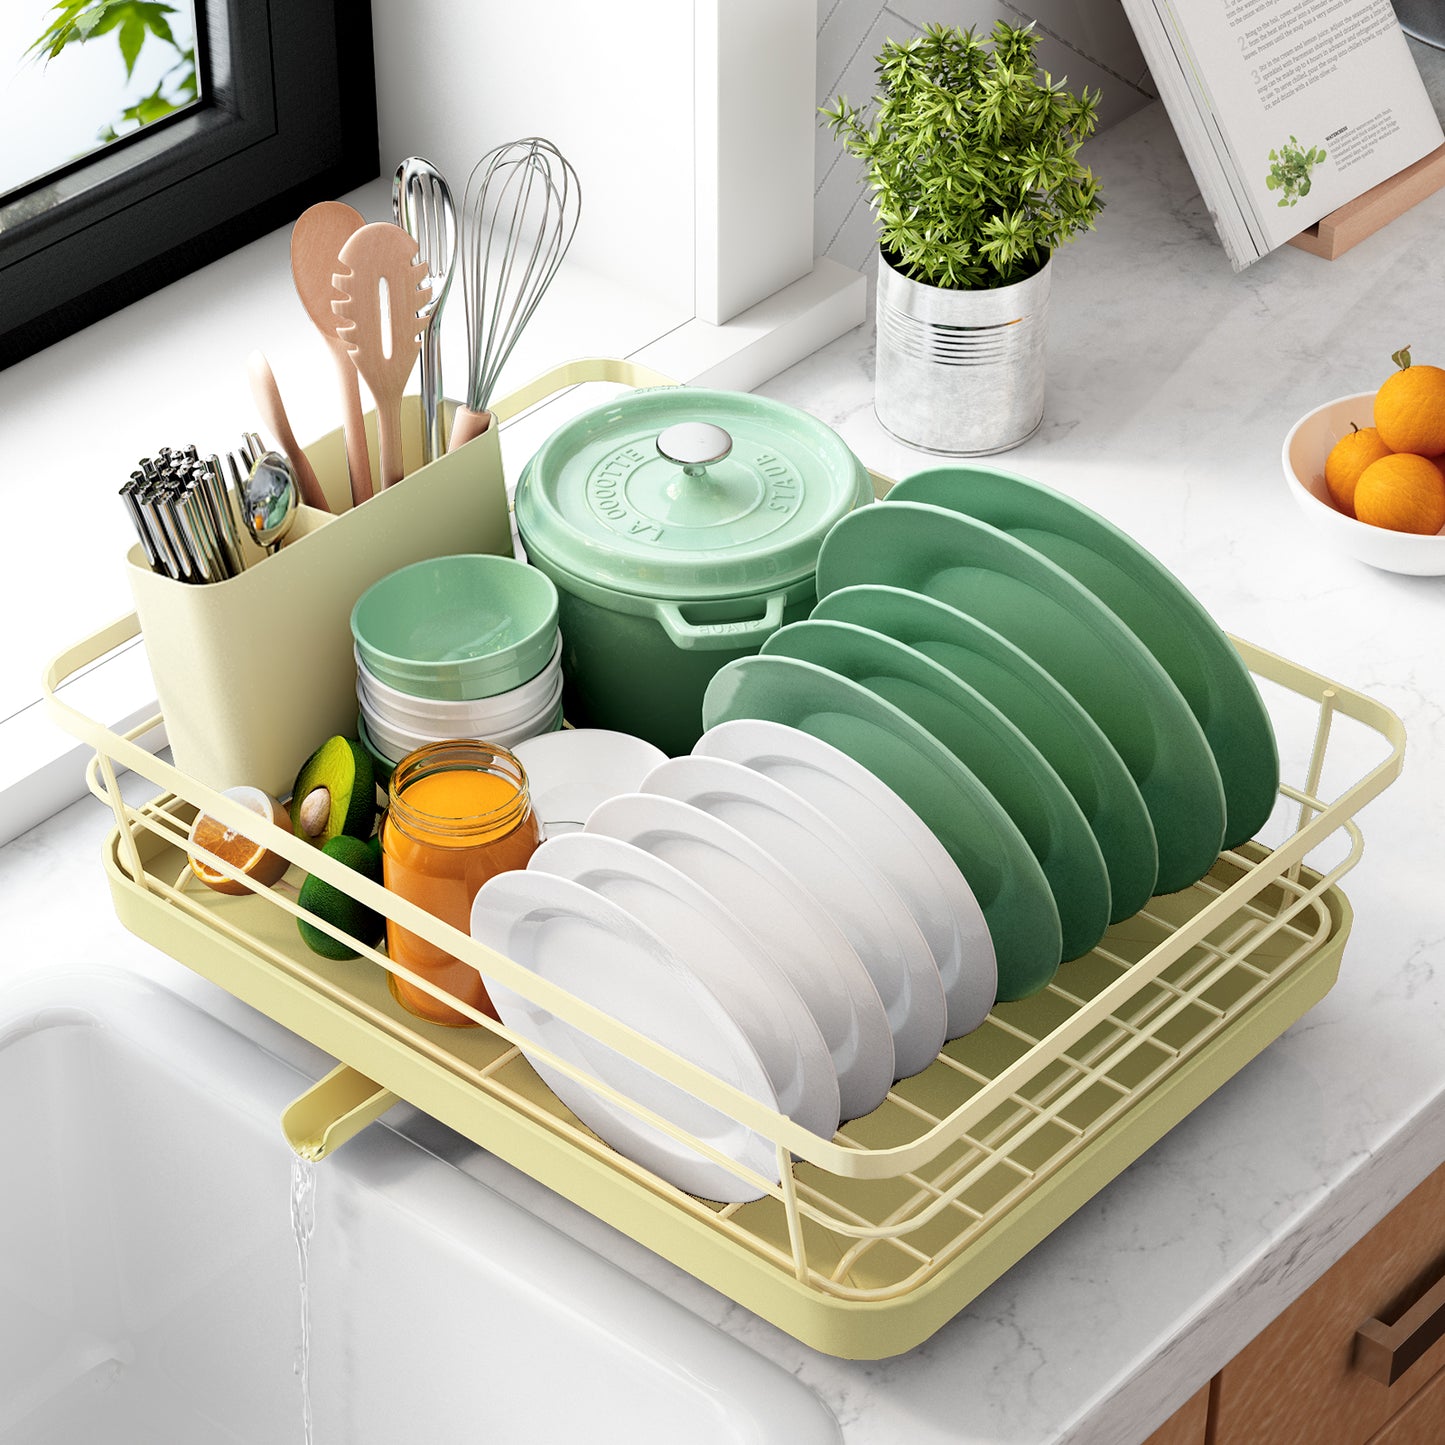 Dish Drying Rack, Multifunctional Dish Rack, Rustproof,drainboard ,  Space-saving 2-tier Large Capacity for Kitchen Counter 